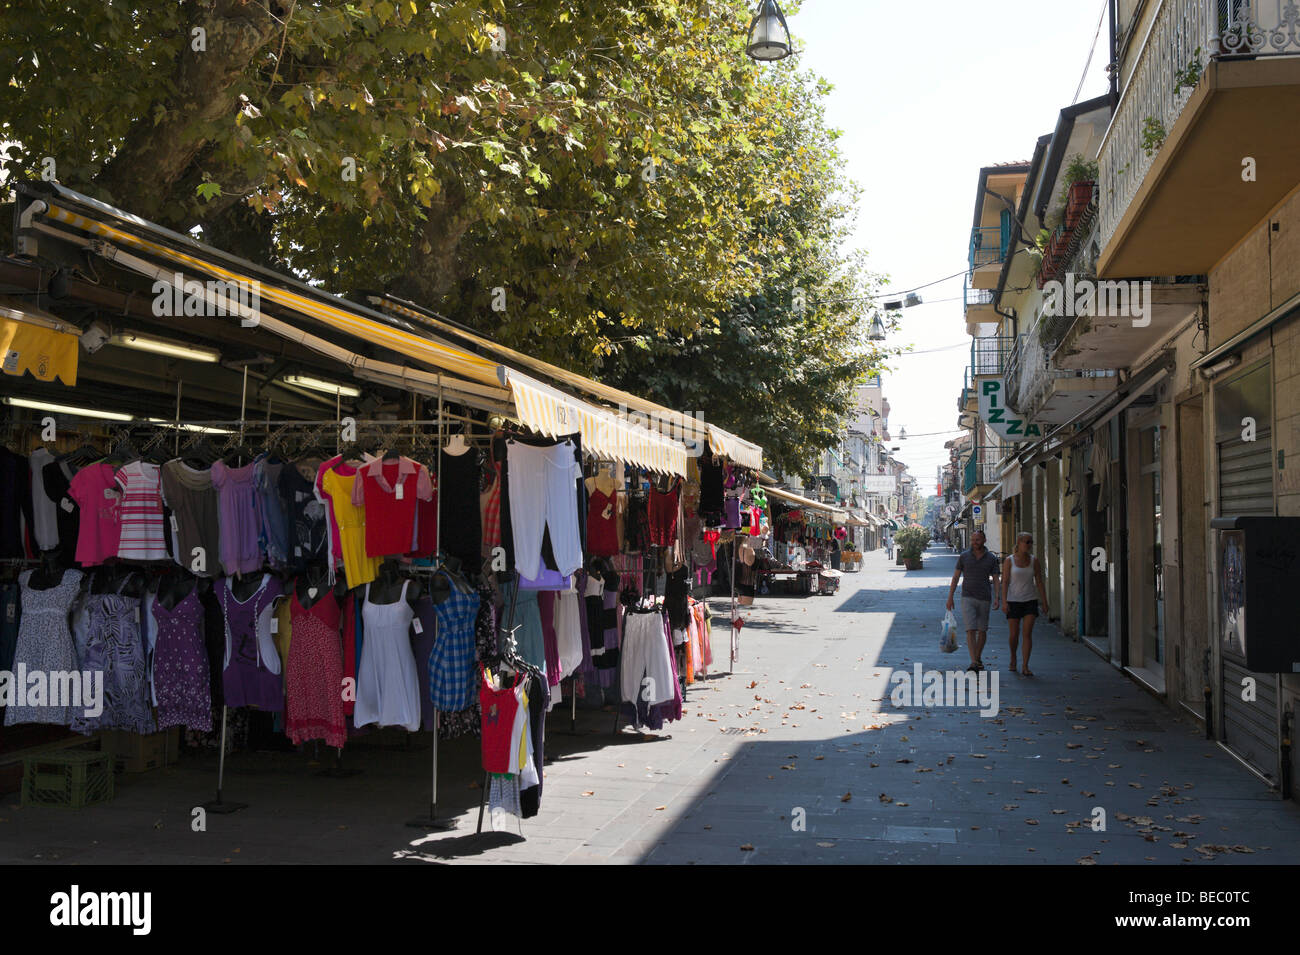 Market stalls in the older part of town, Viareggio, Tuscan Riviera, Tuscany, Italy Stock Photo